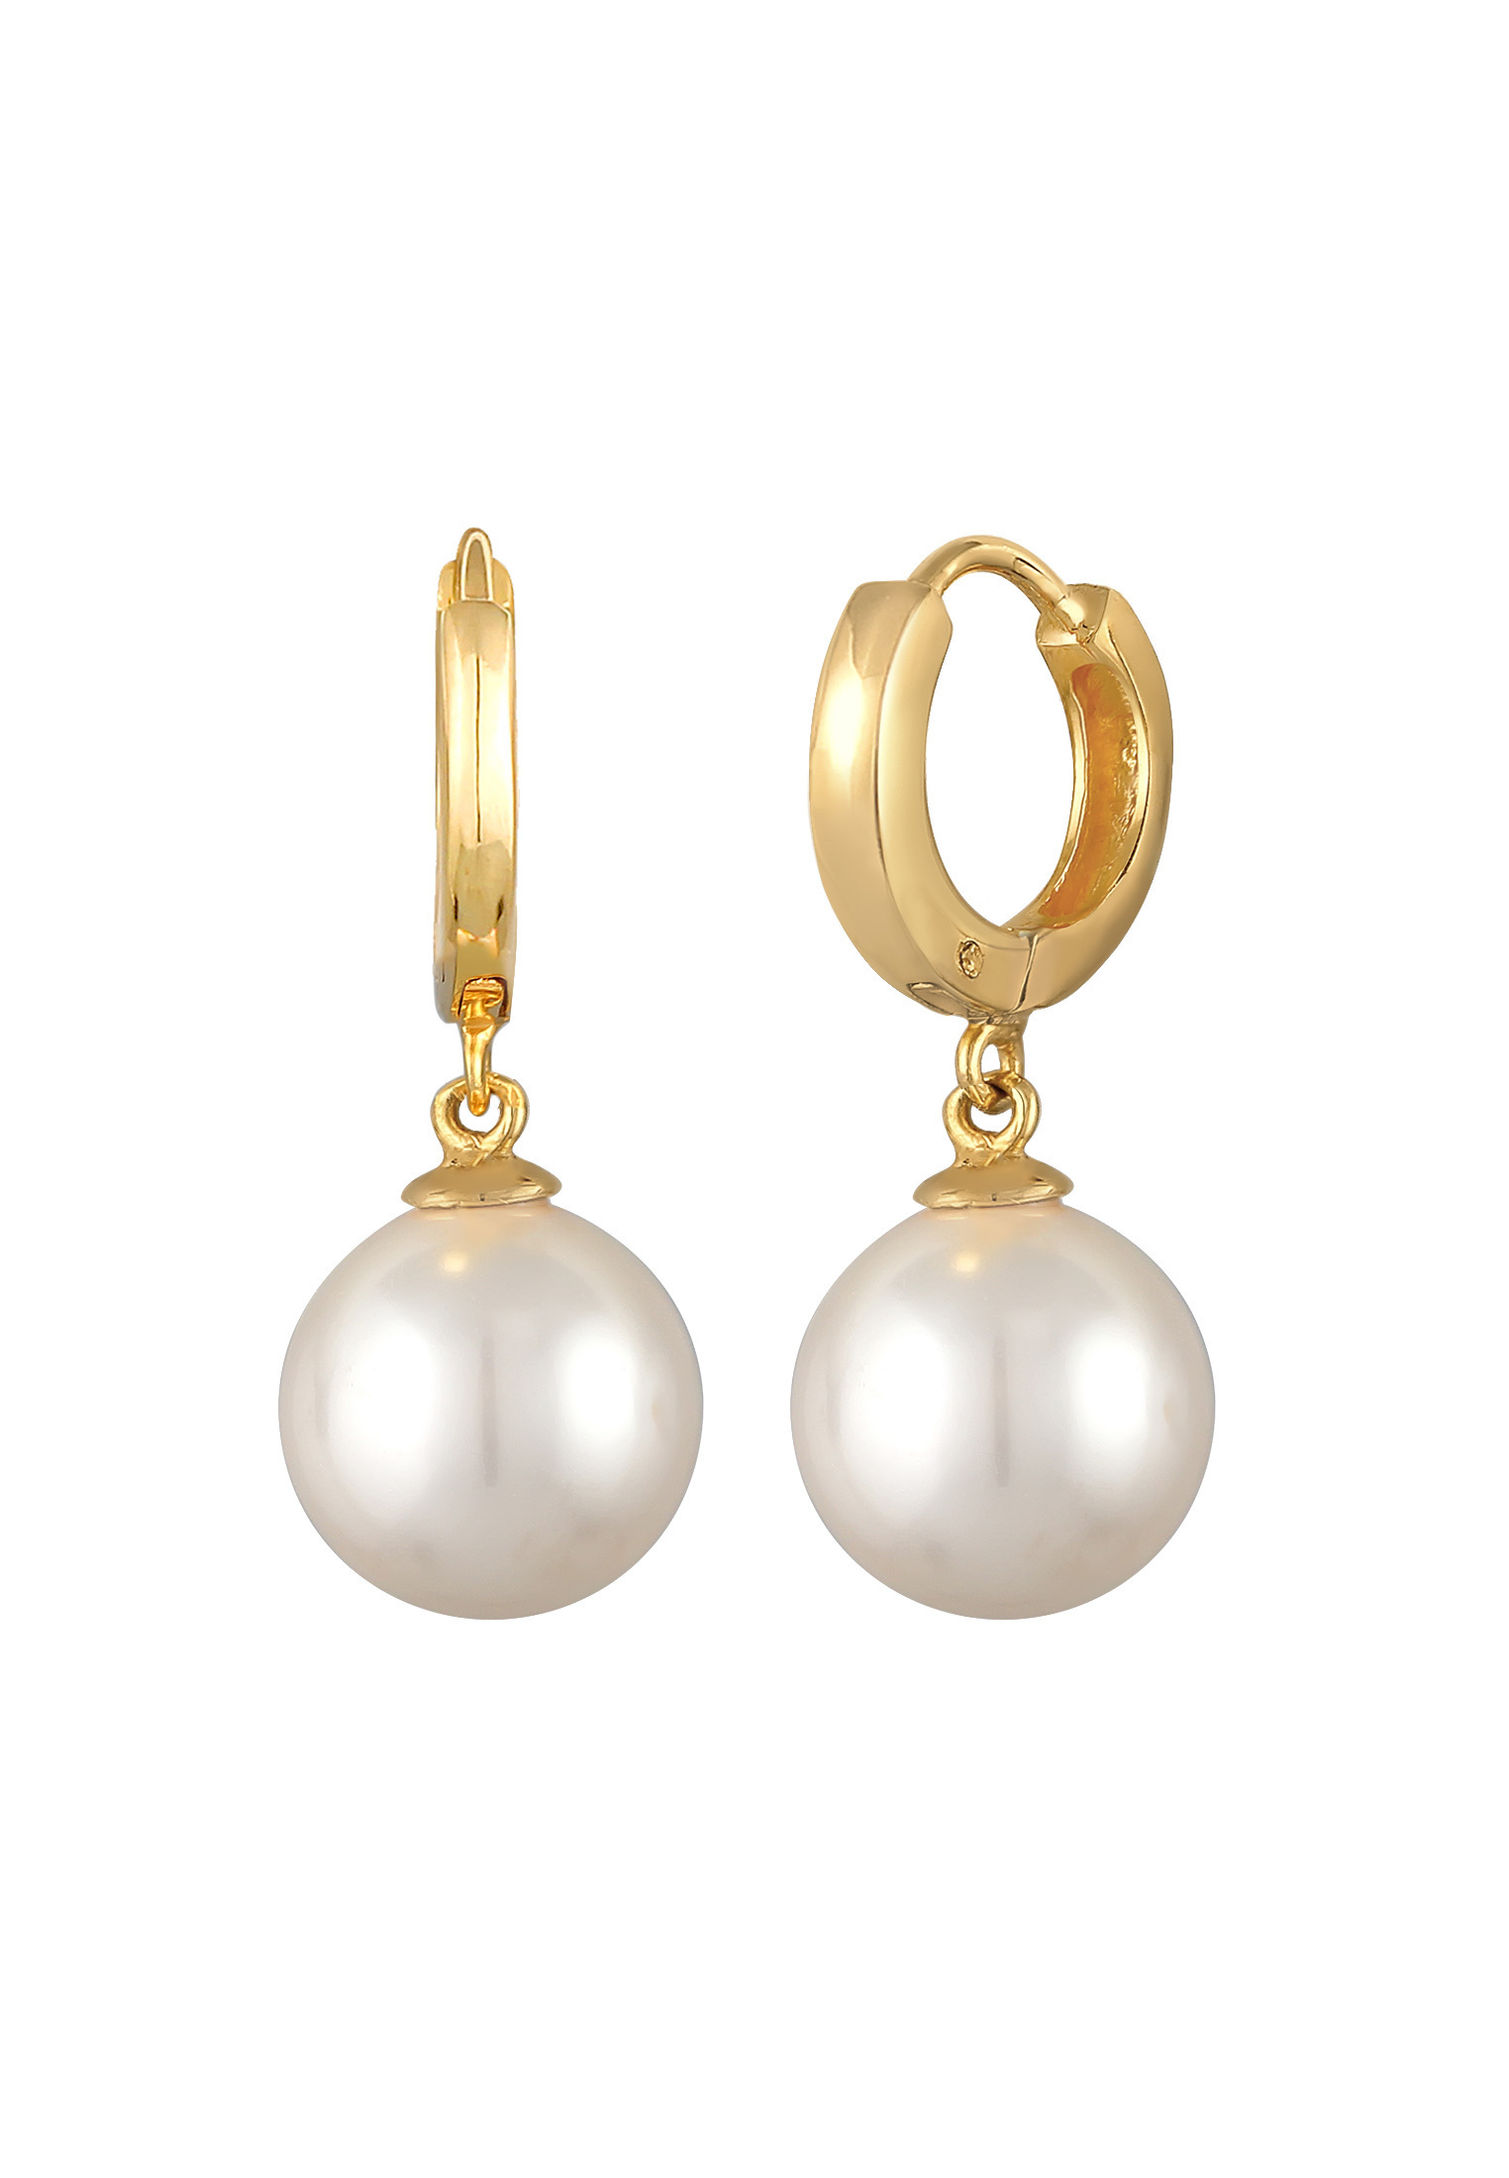 Nenalina Ohrringe Creolen synthetische Perlen Ohrhänger Klassik 925er  Silber Farbe: Gold | Weltbild.de